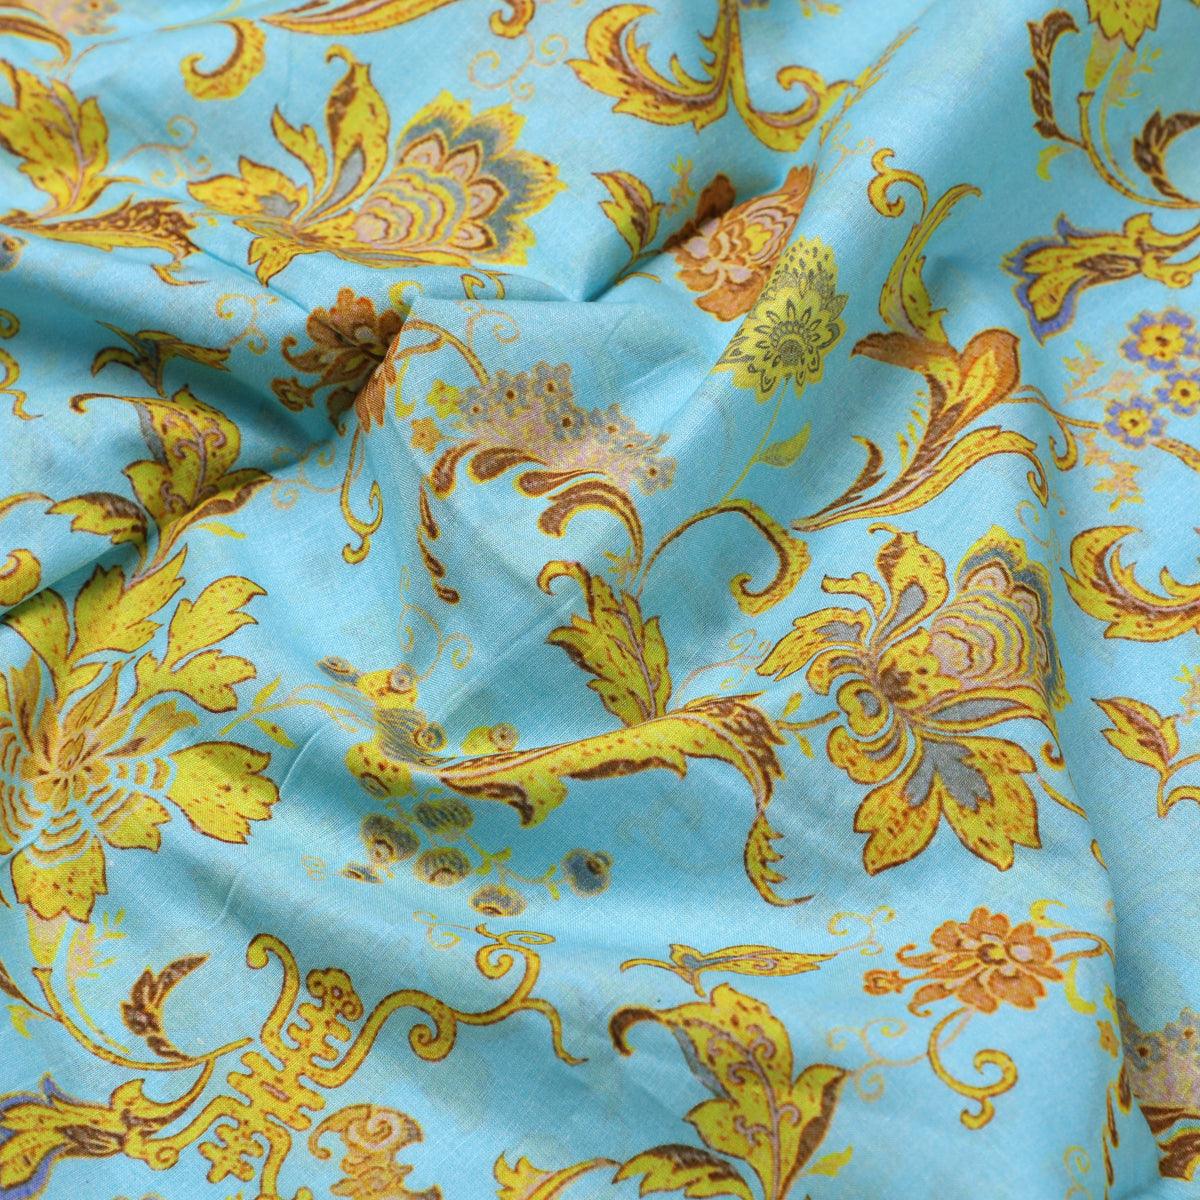 Royal Golden Flower Branch Digital Printed Fabric - Pure Cotton - FAB VOGUE Studio®